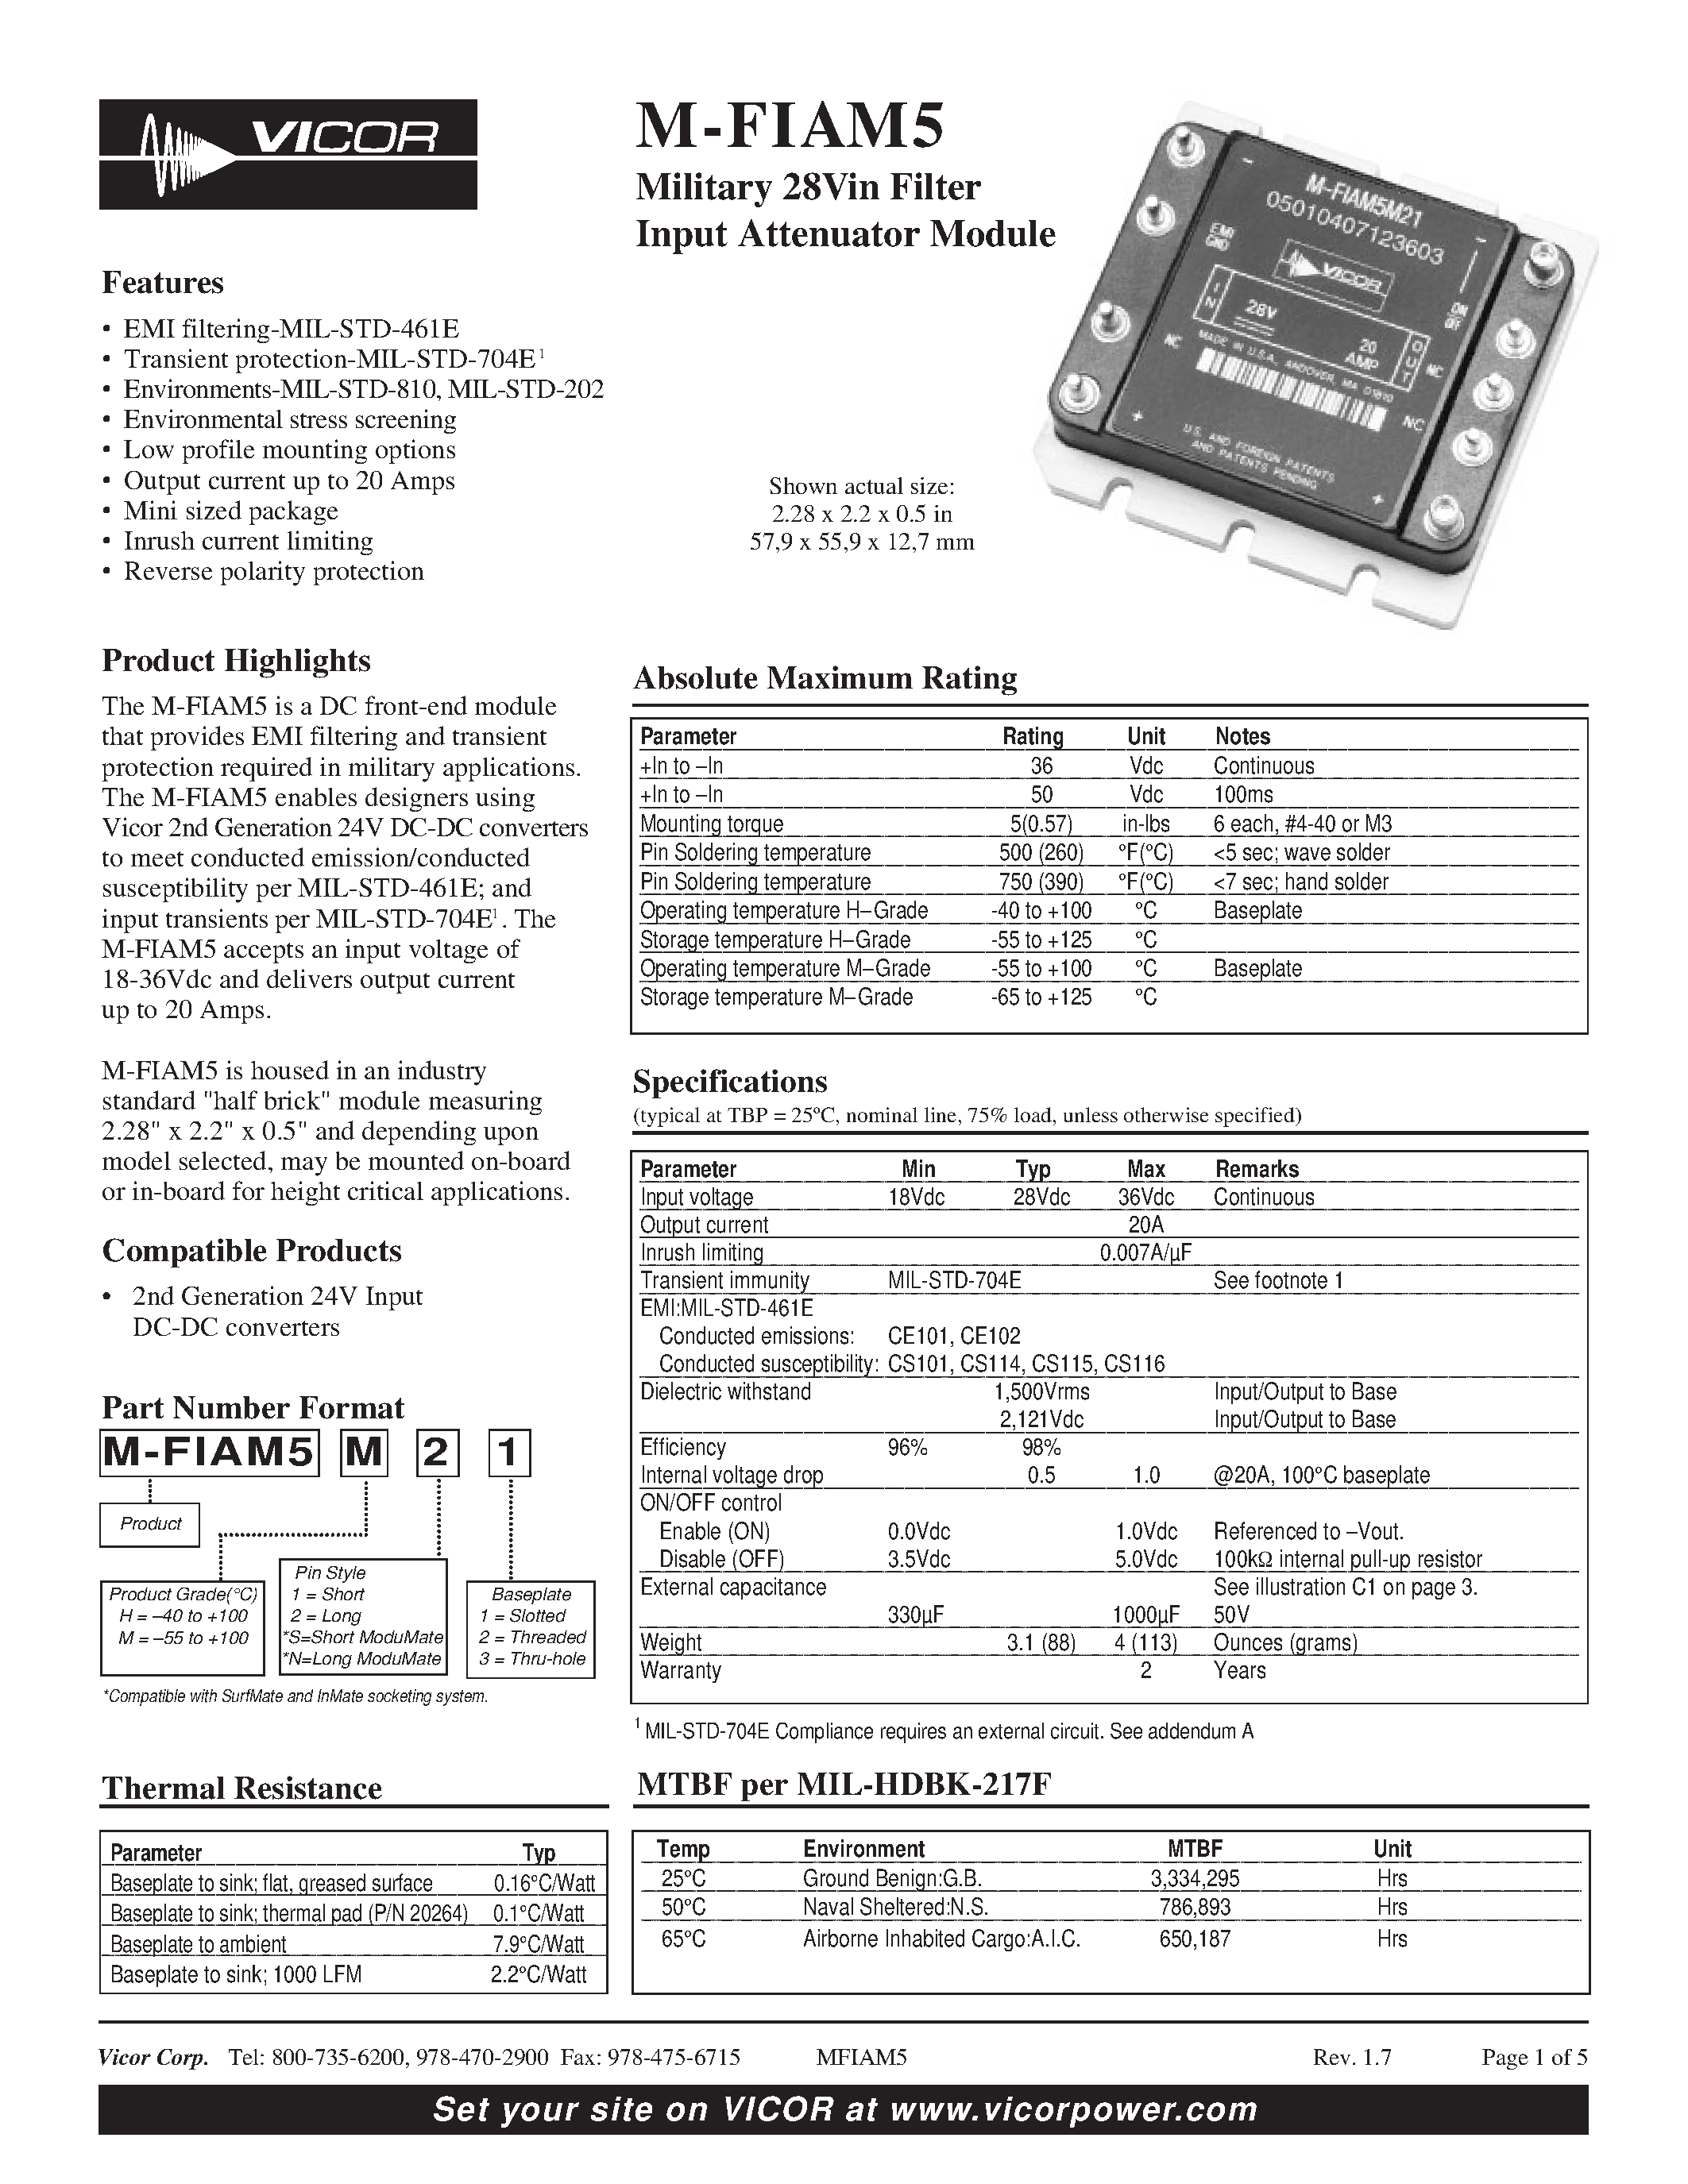 Datasheet M-FIAM5M13 - Military 28Vin Filter Input Attenuator Module page 1